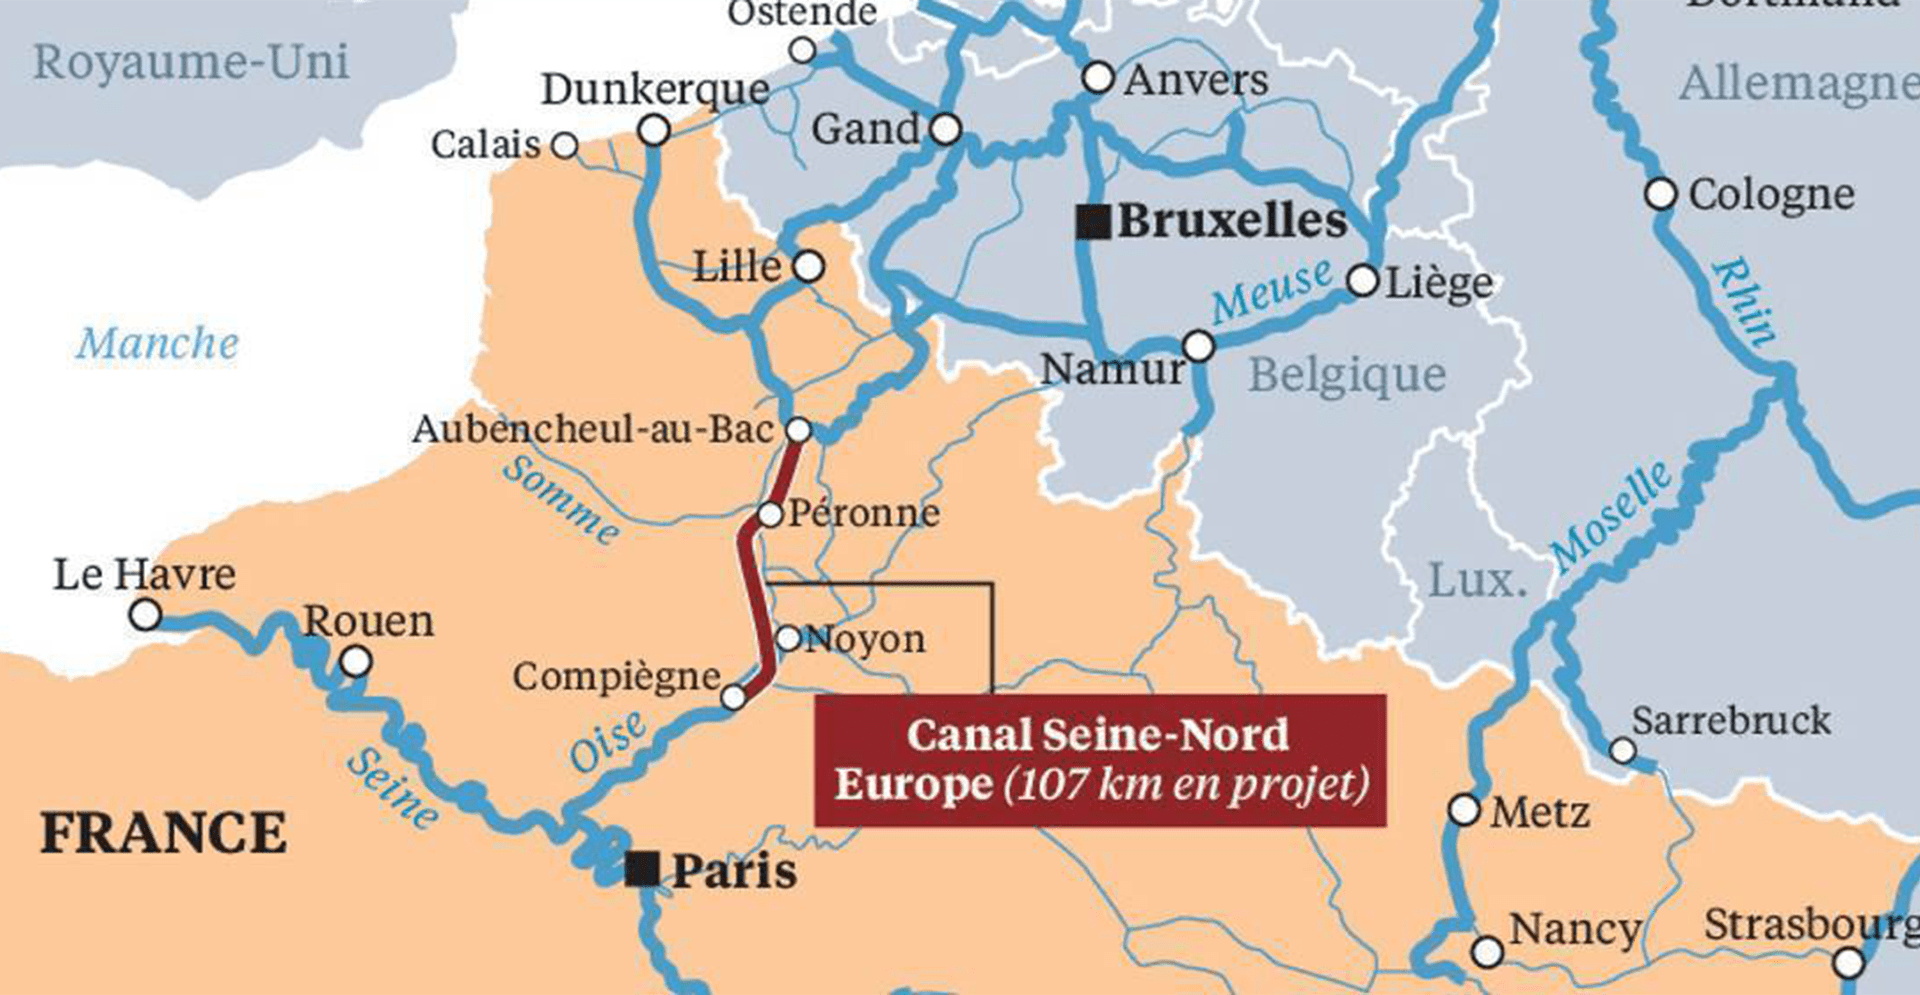 Canal Seine-Nord Europe